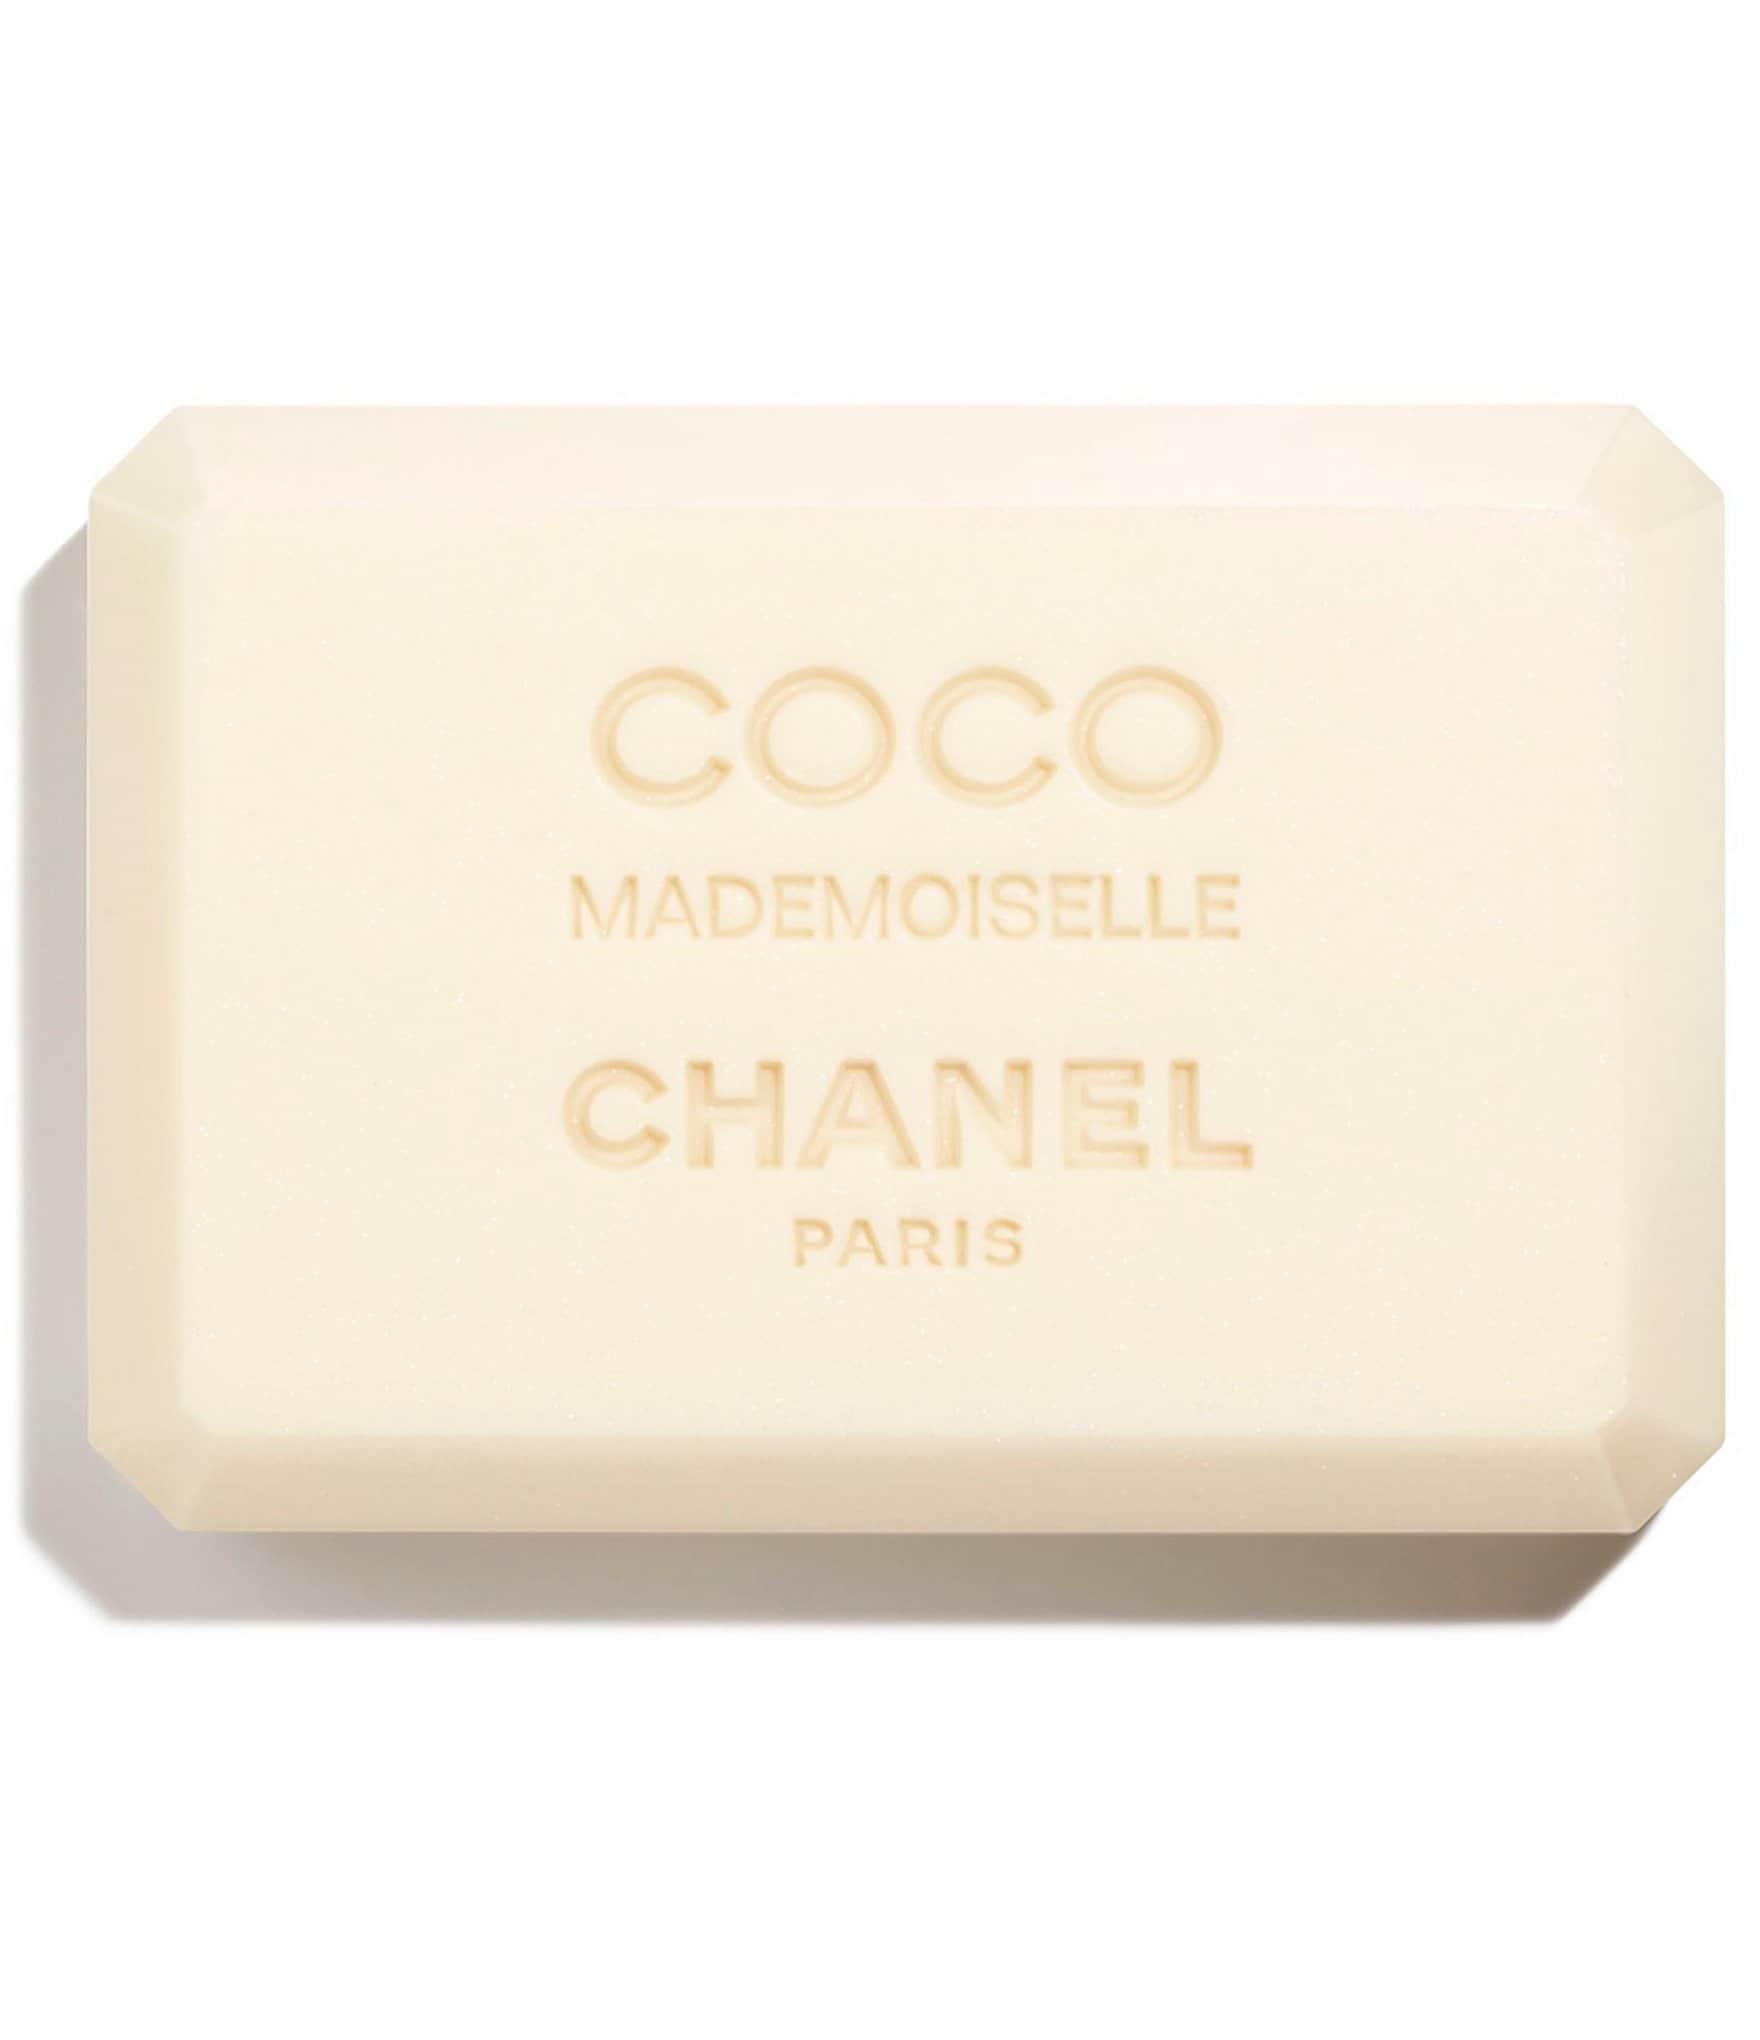 Chanel Coco Mademoiselle Gentle Perfumed Soap